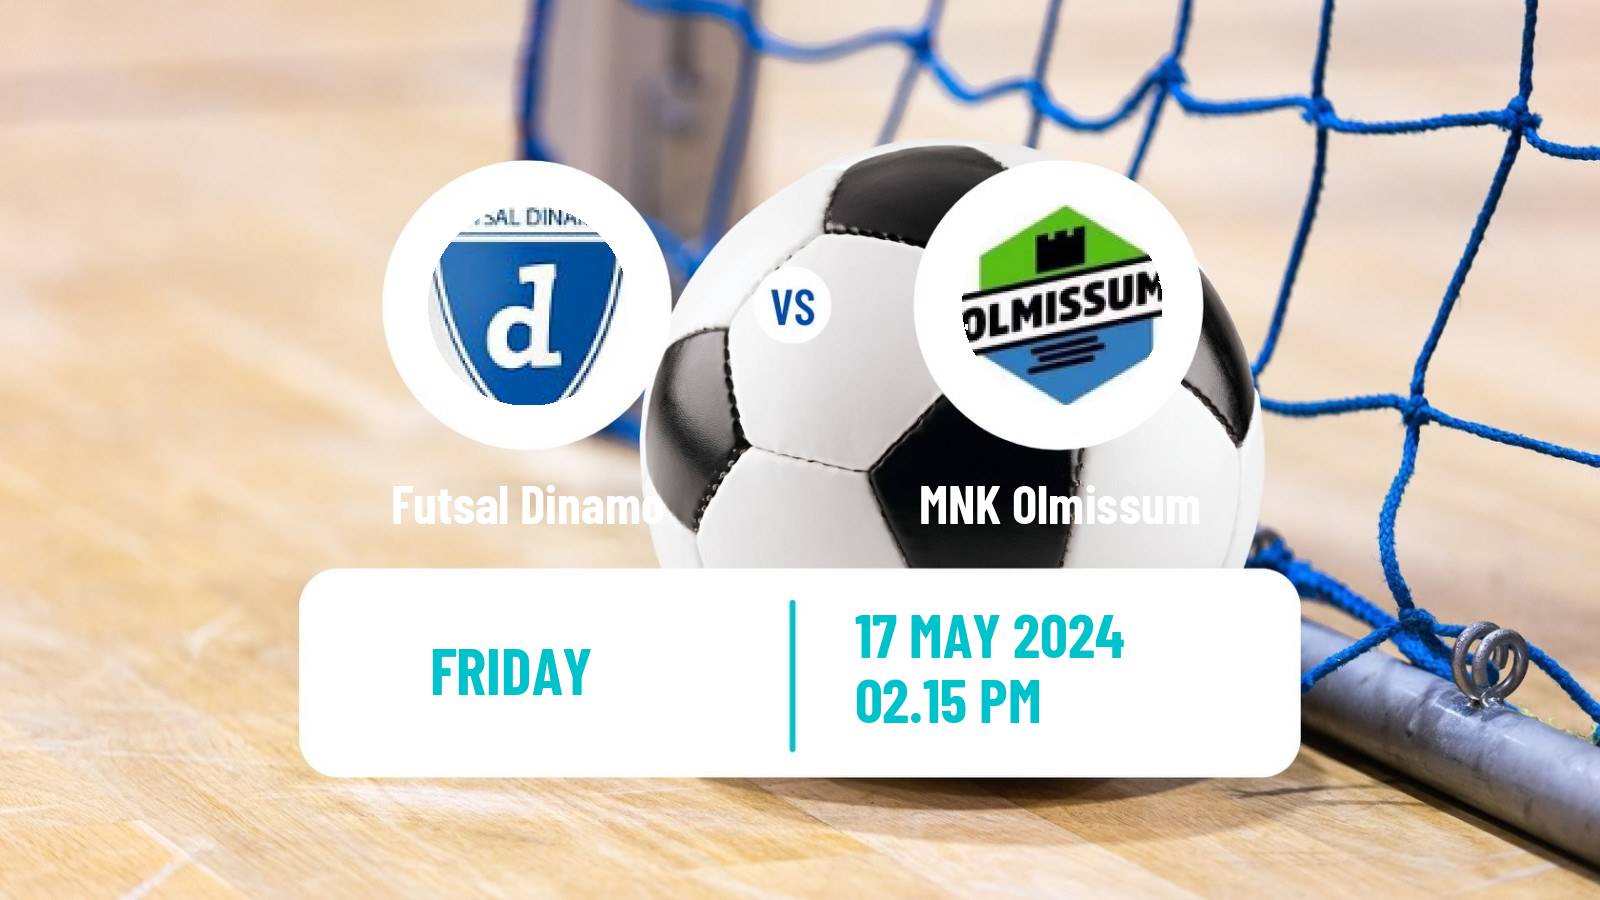 Futsal Croatian 1 HMNL Futsal Dinamo - Olmissum